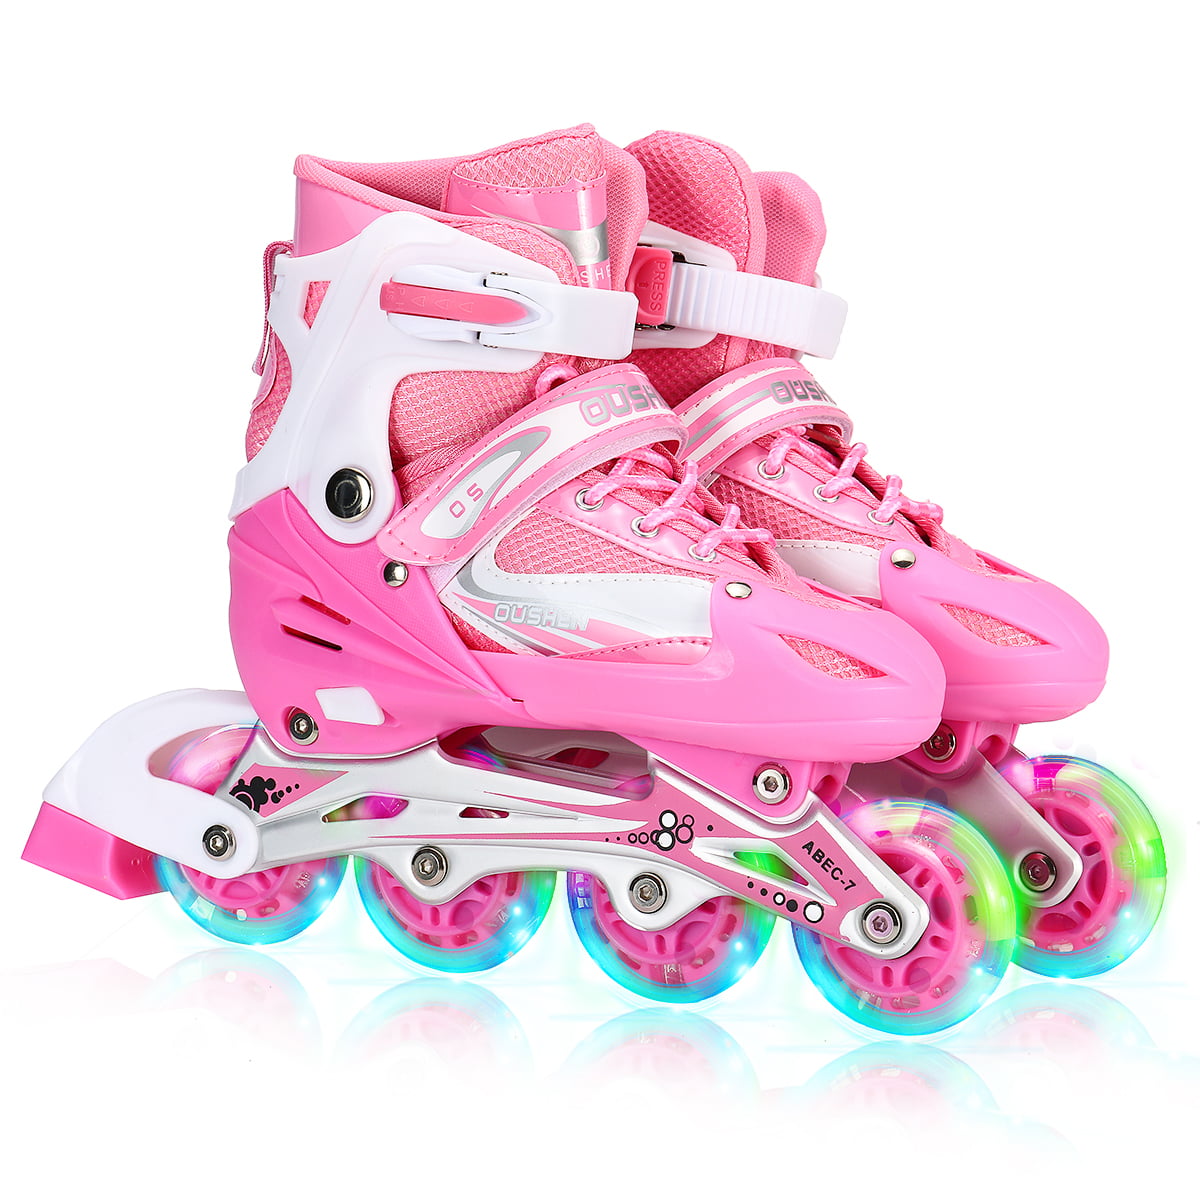 Adjustable Skates W/ Flashing 4 Wheels Kids Boys Girls Adjustable Roller Blades 